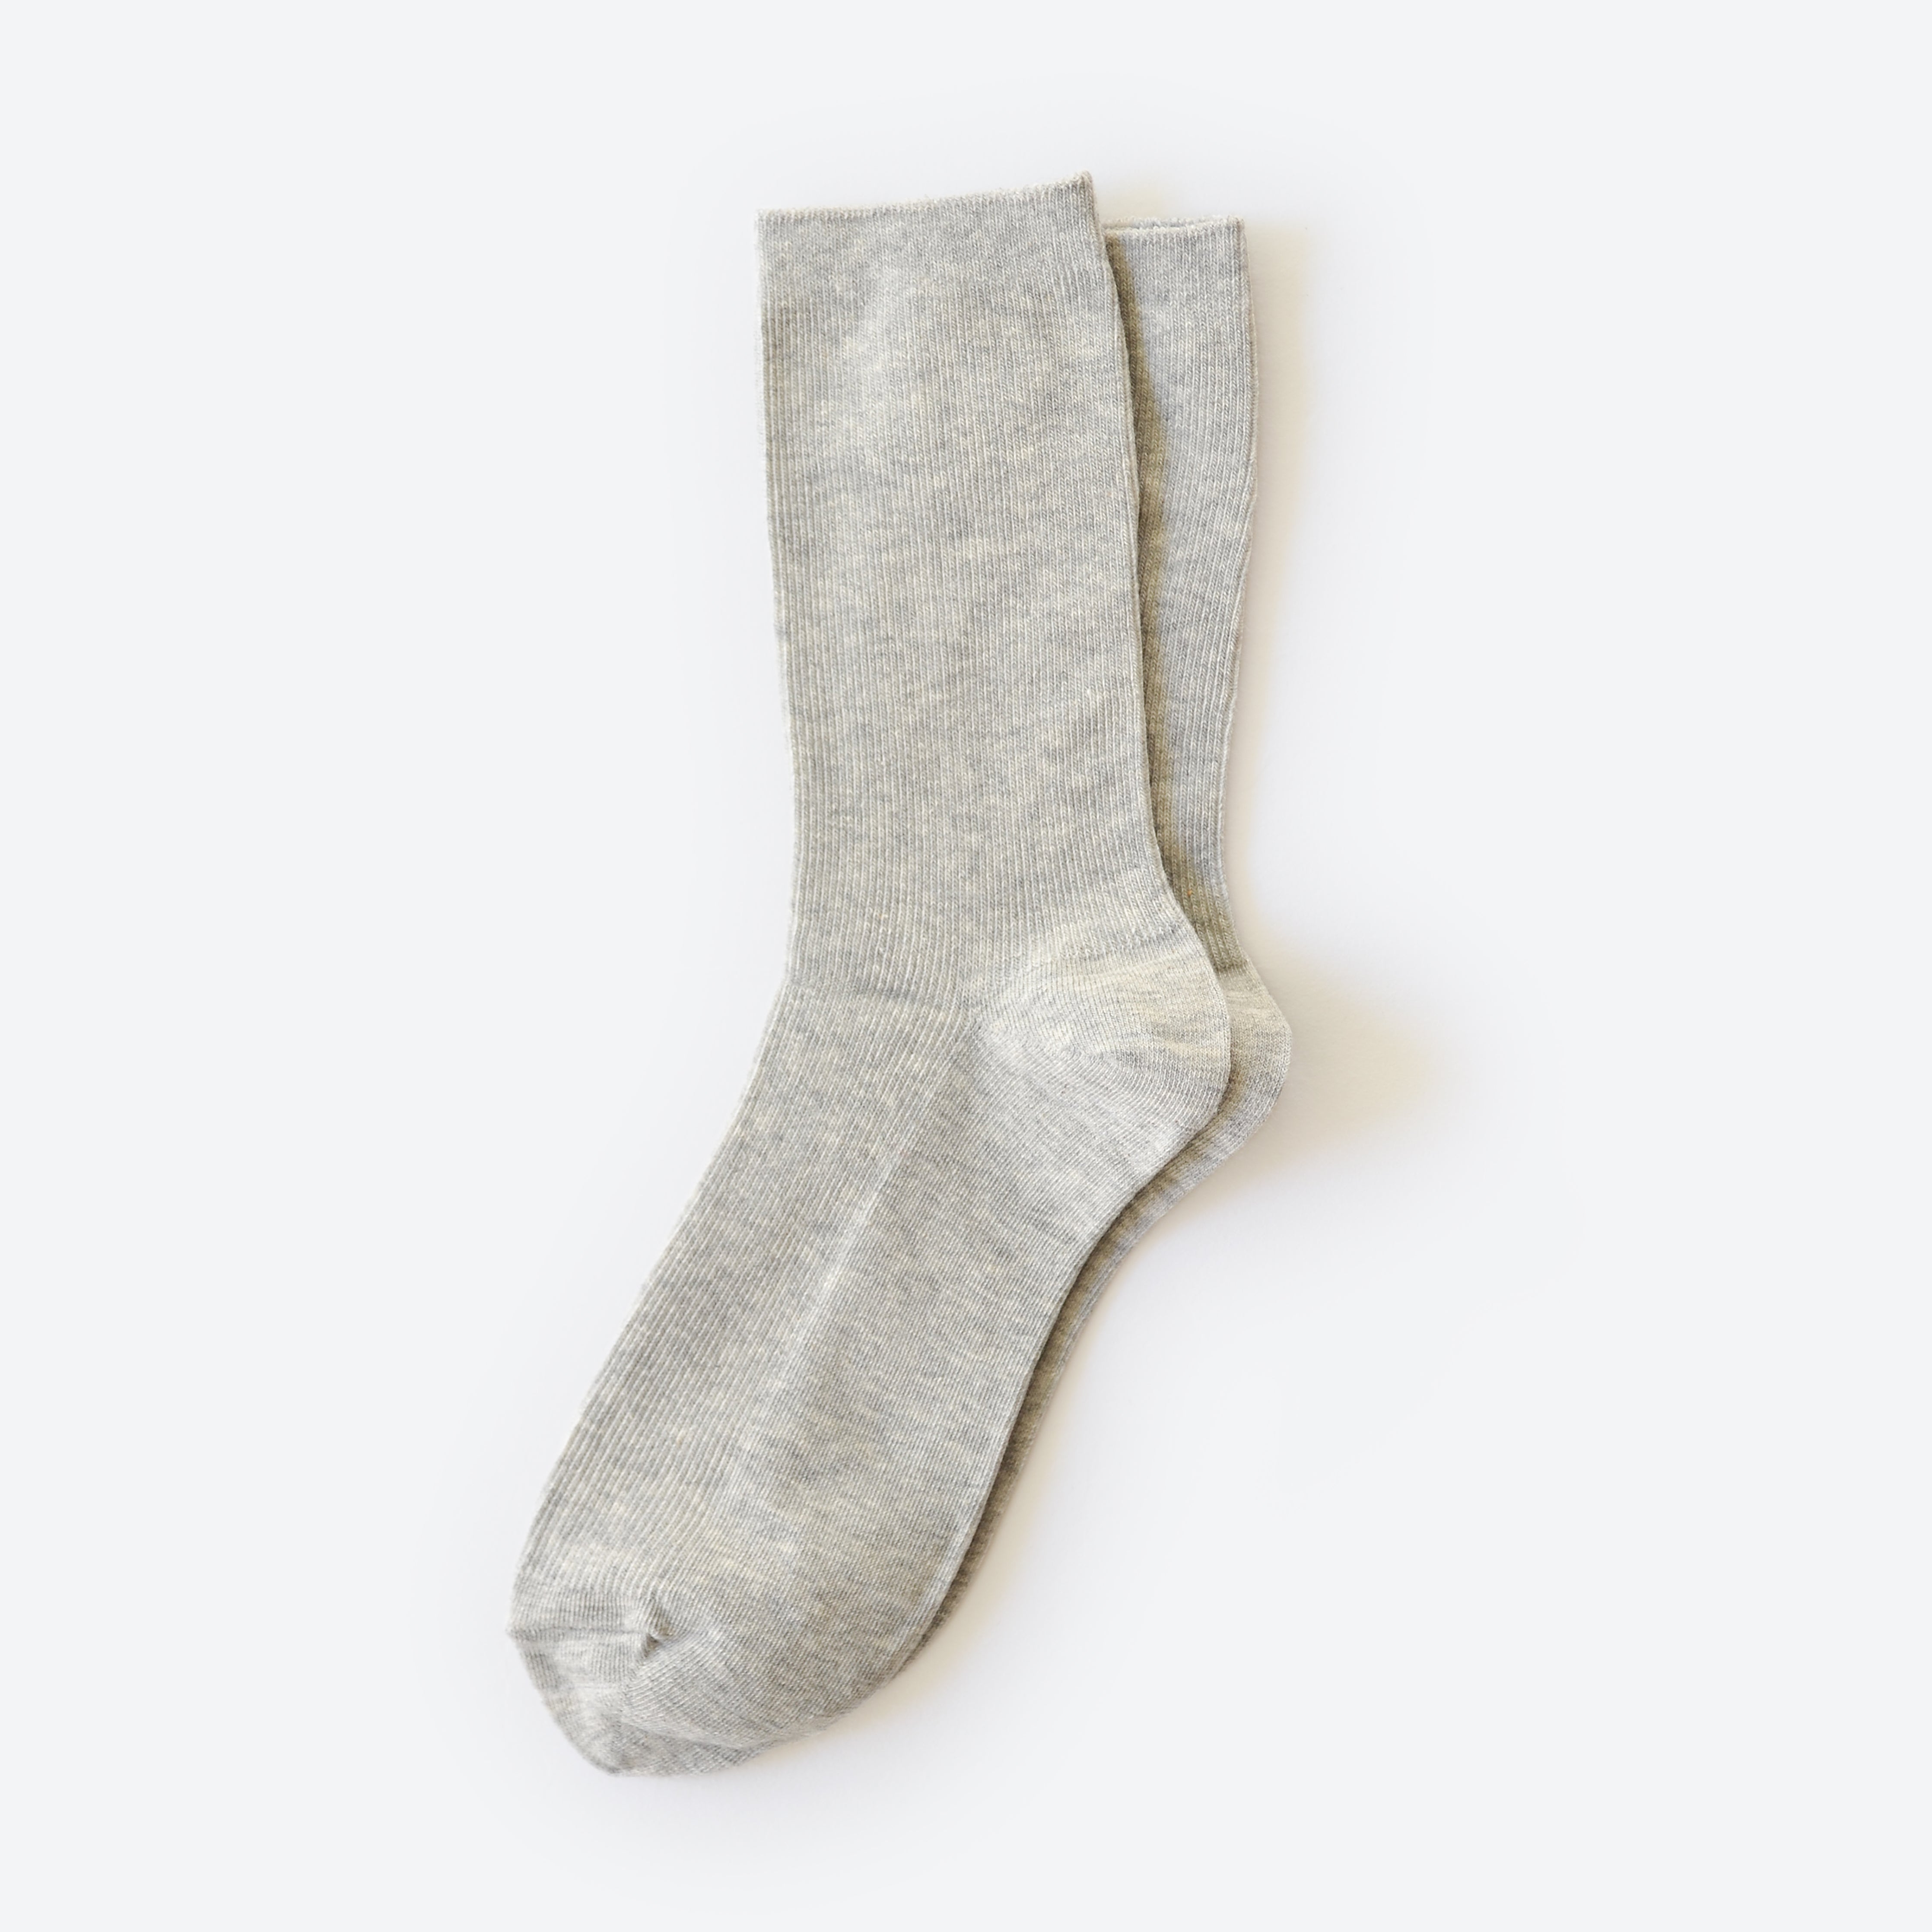 Cement - Everyday Solid Grey Color Cotton Crew Socks – Hooray Sock Co.